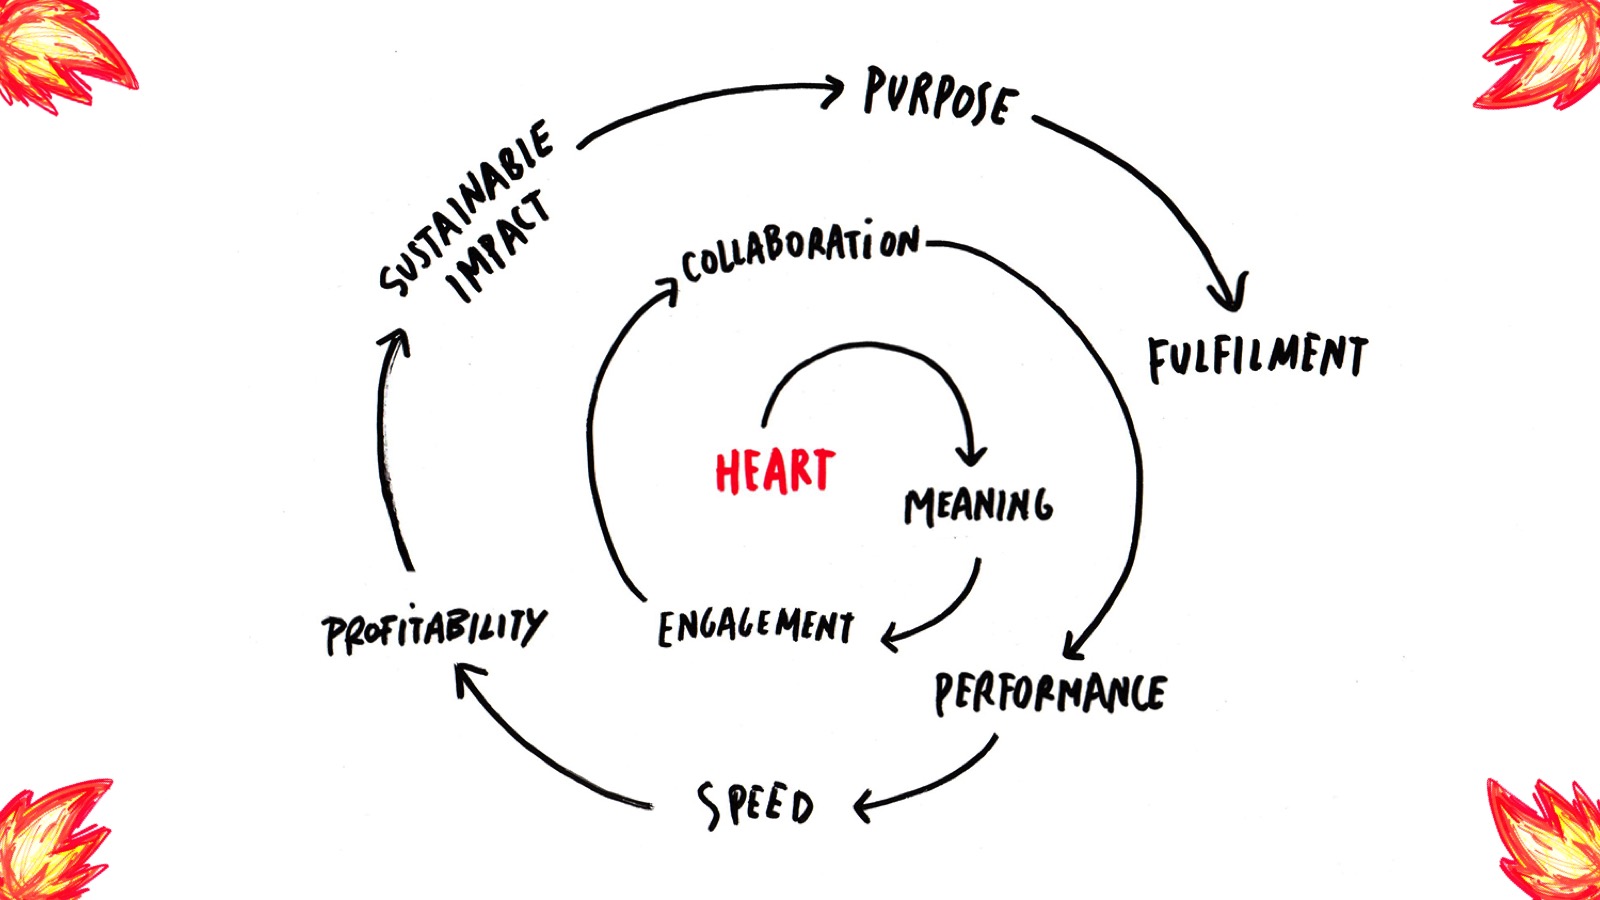 Marie Reig Florensa's virtuos spiral of heart-based leadership